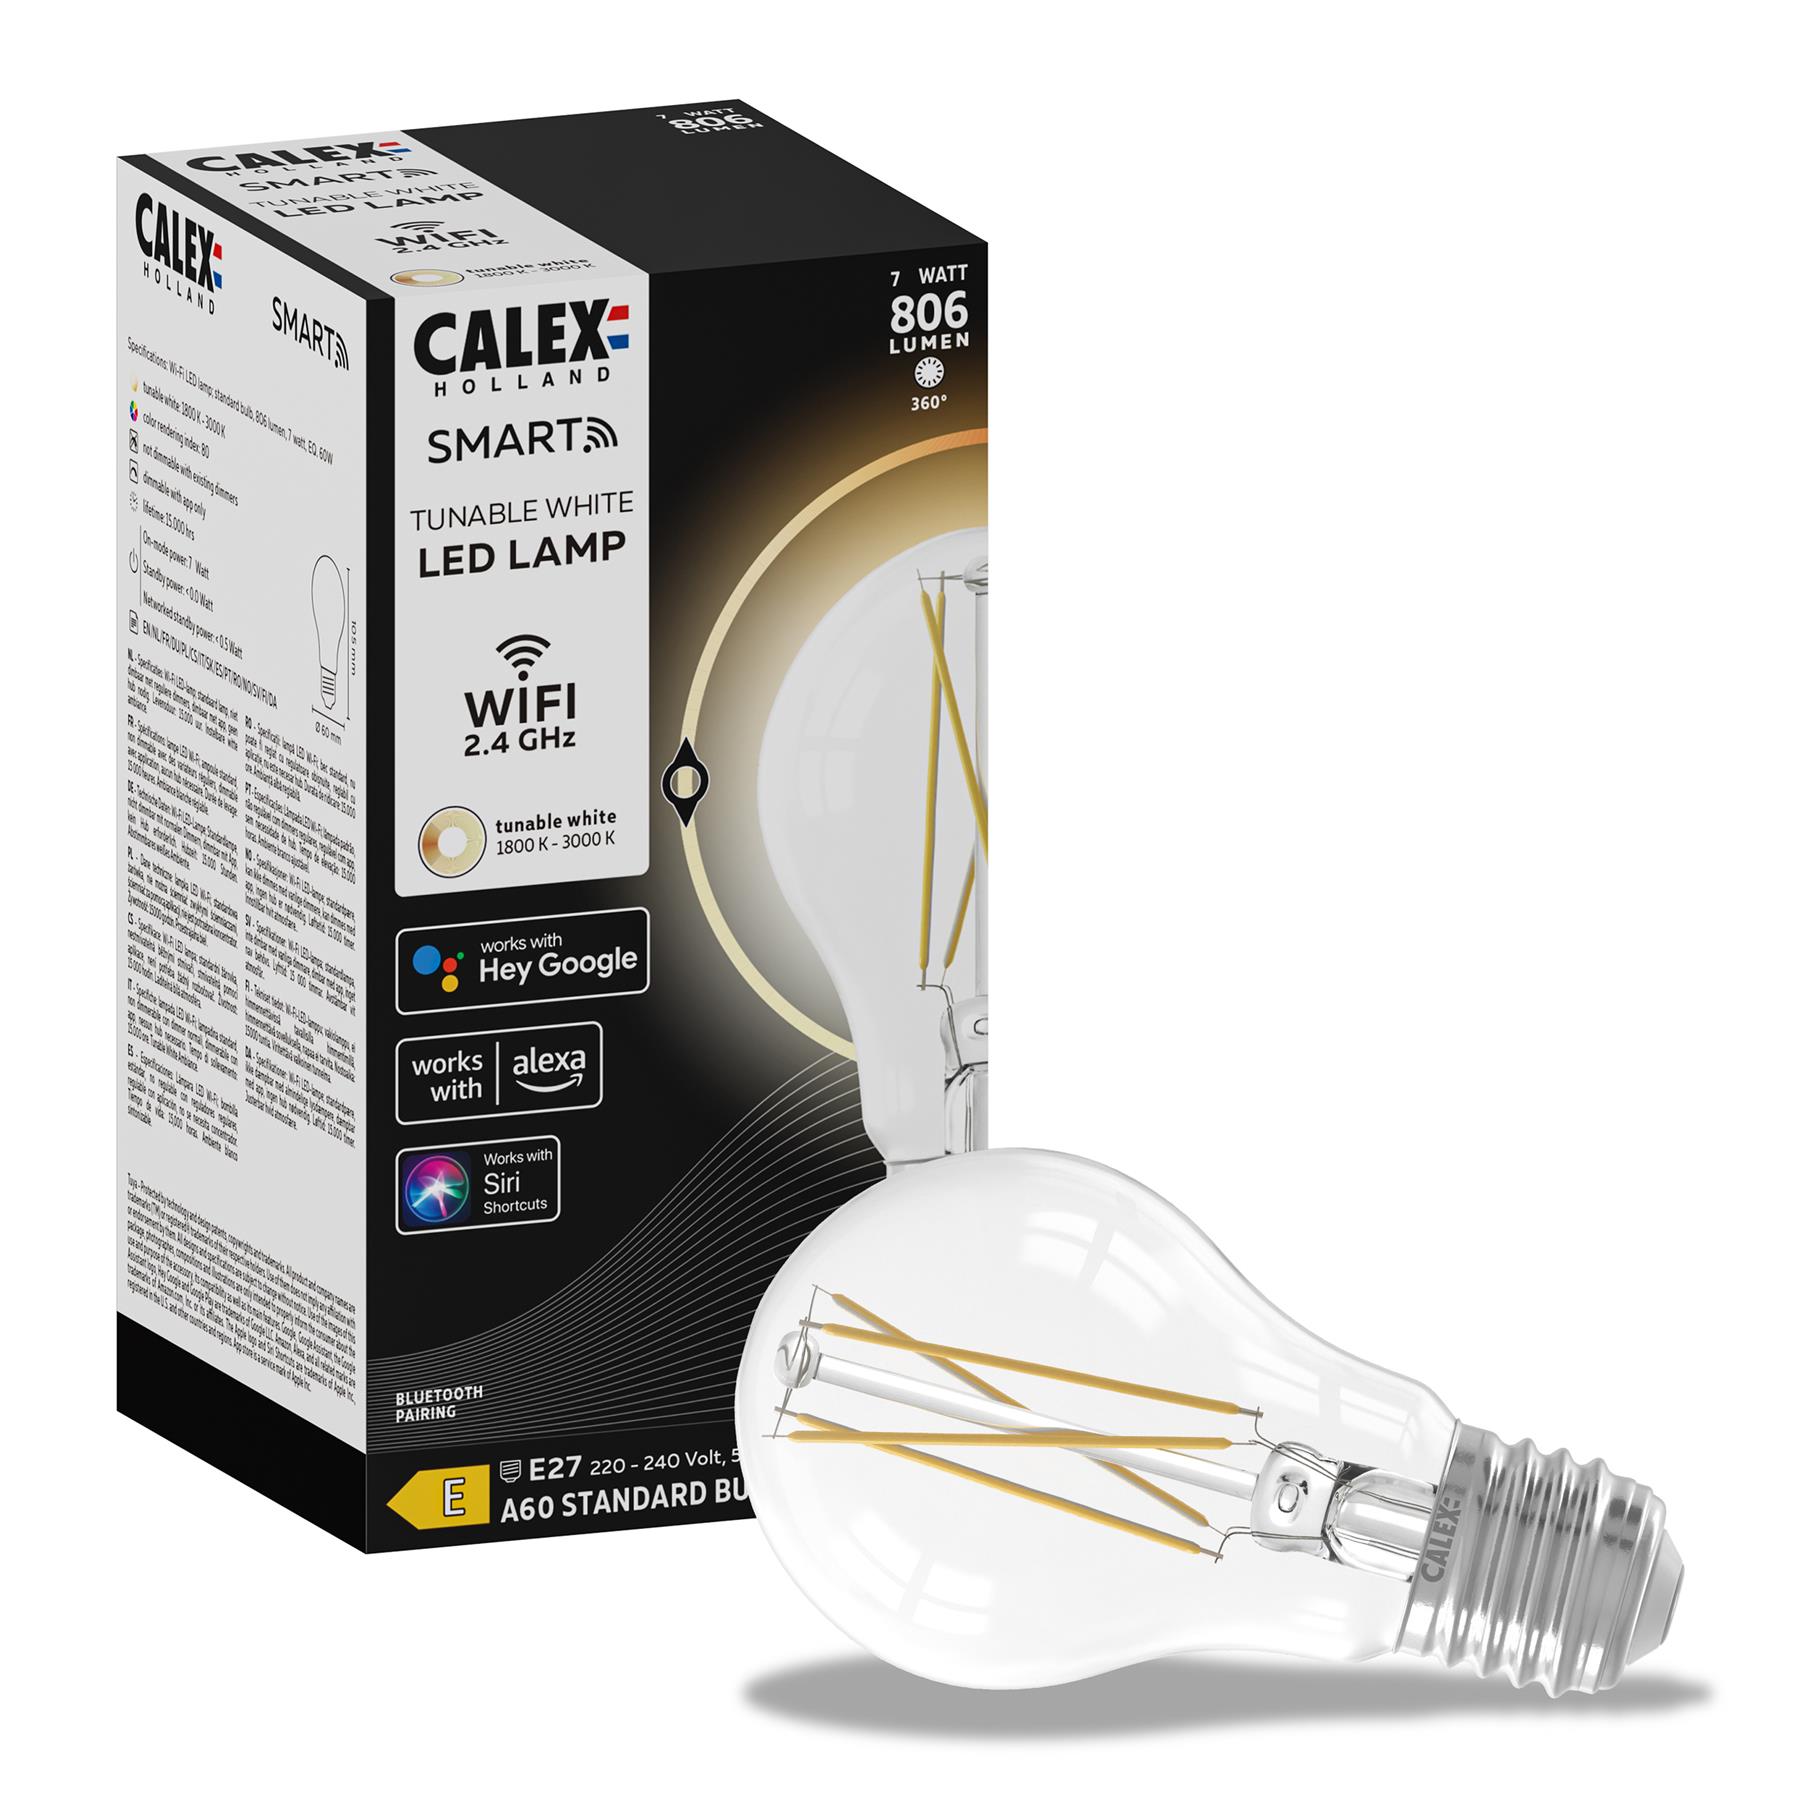 nakomelingen B.C. Evalueerbaar Calex Smart LED E27 A60 13 cm Standaardlamp kopen? Shop bij fonQ!